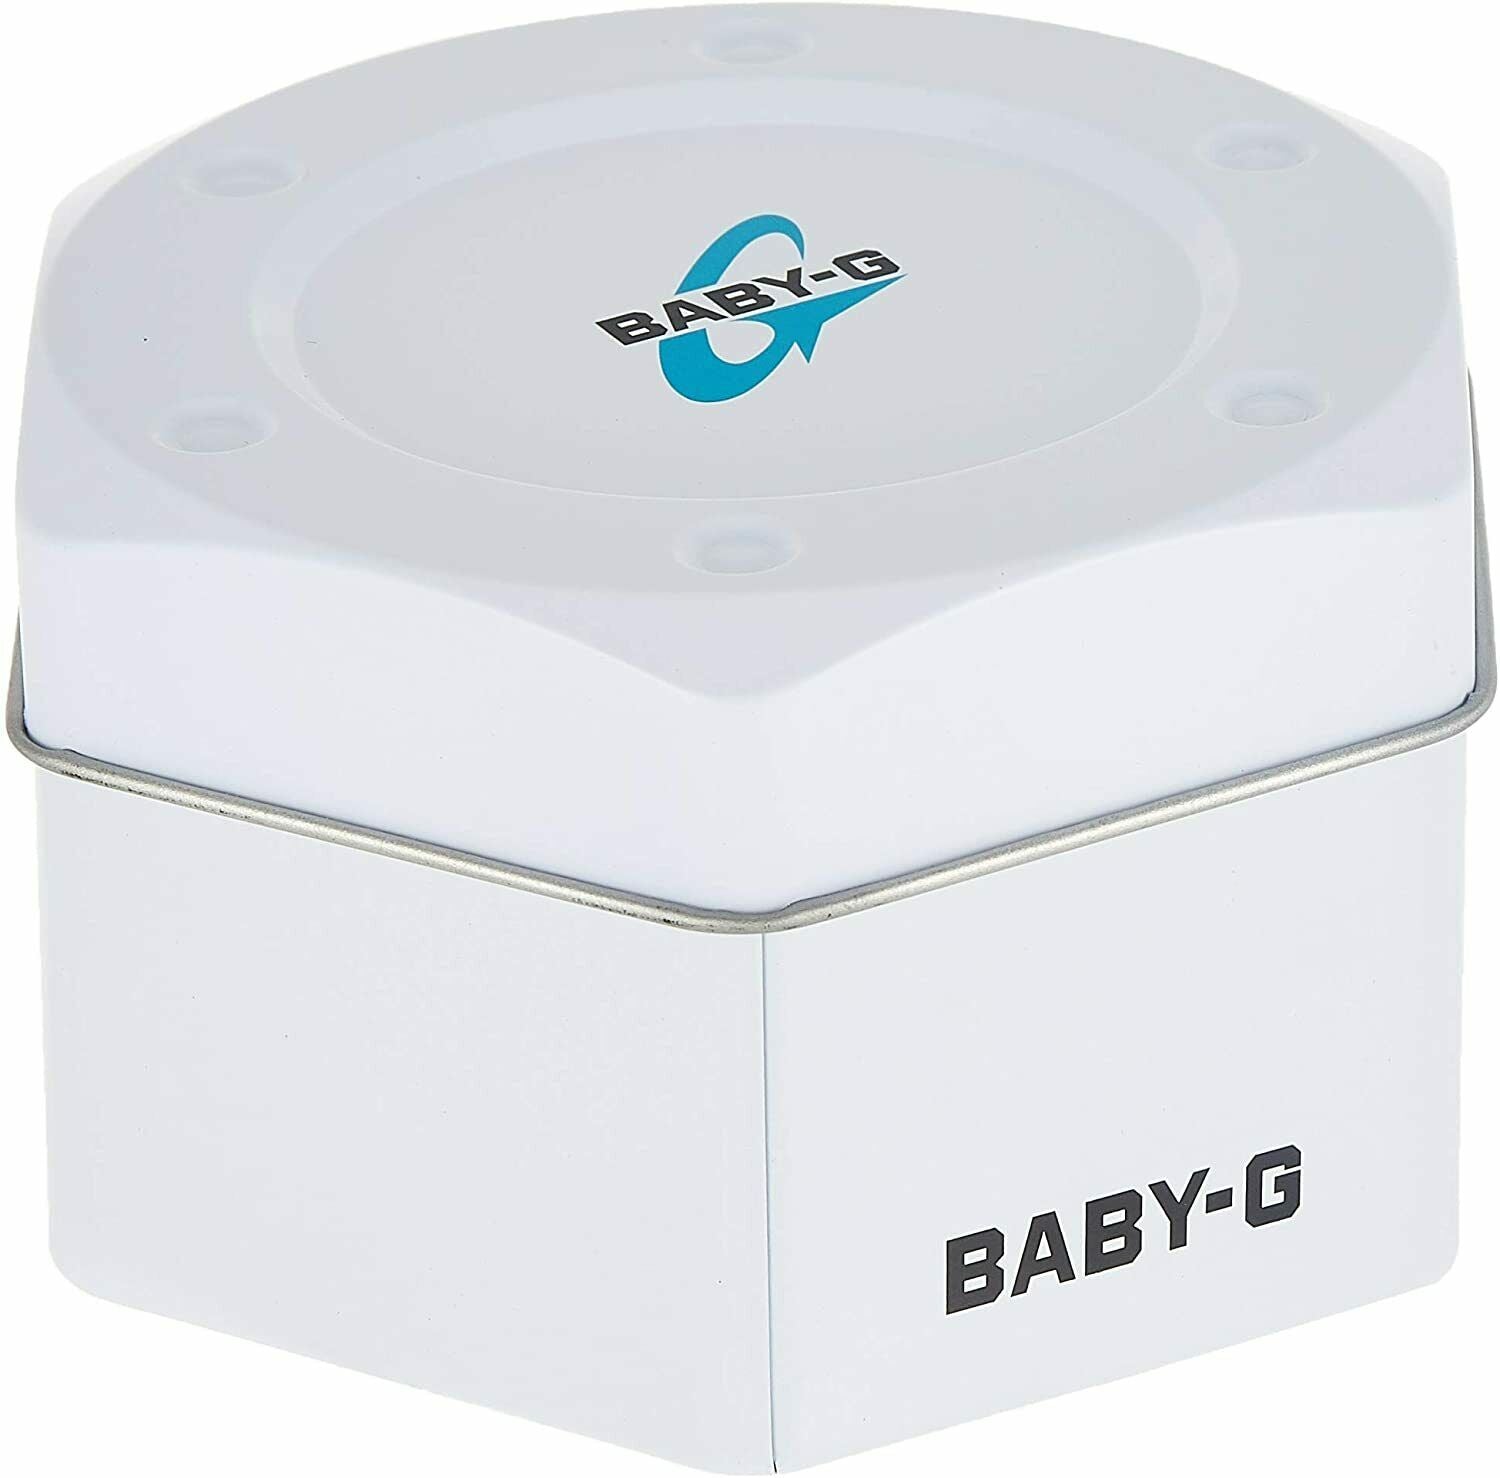 Casio Baby-G Display Tin Box Presentation Storage Original New White Metal